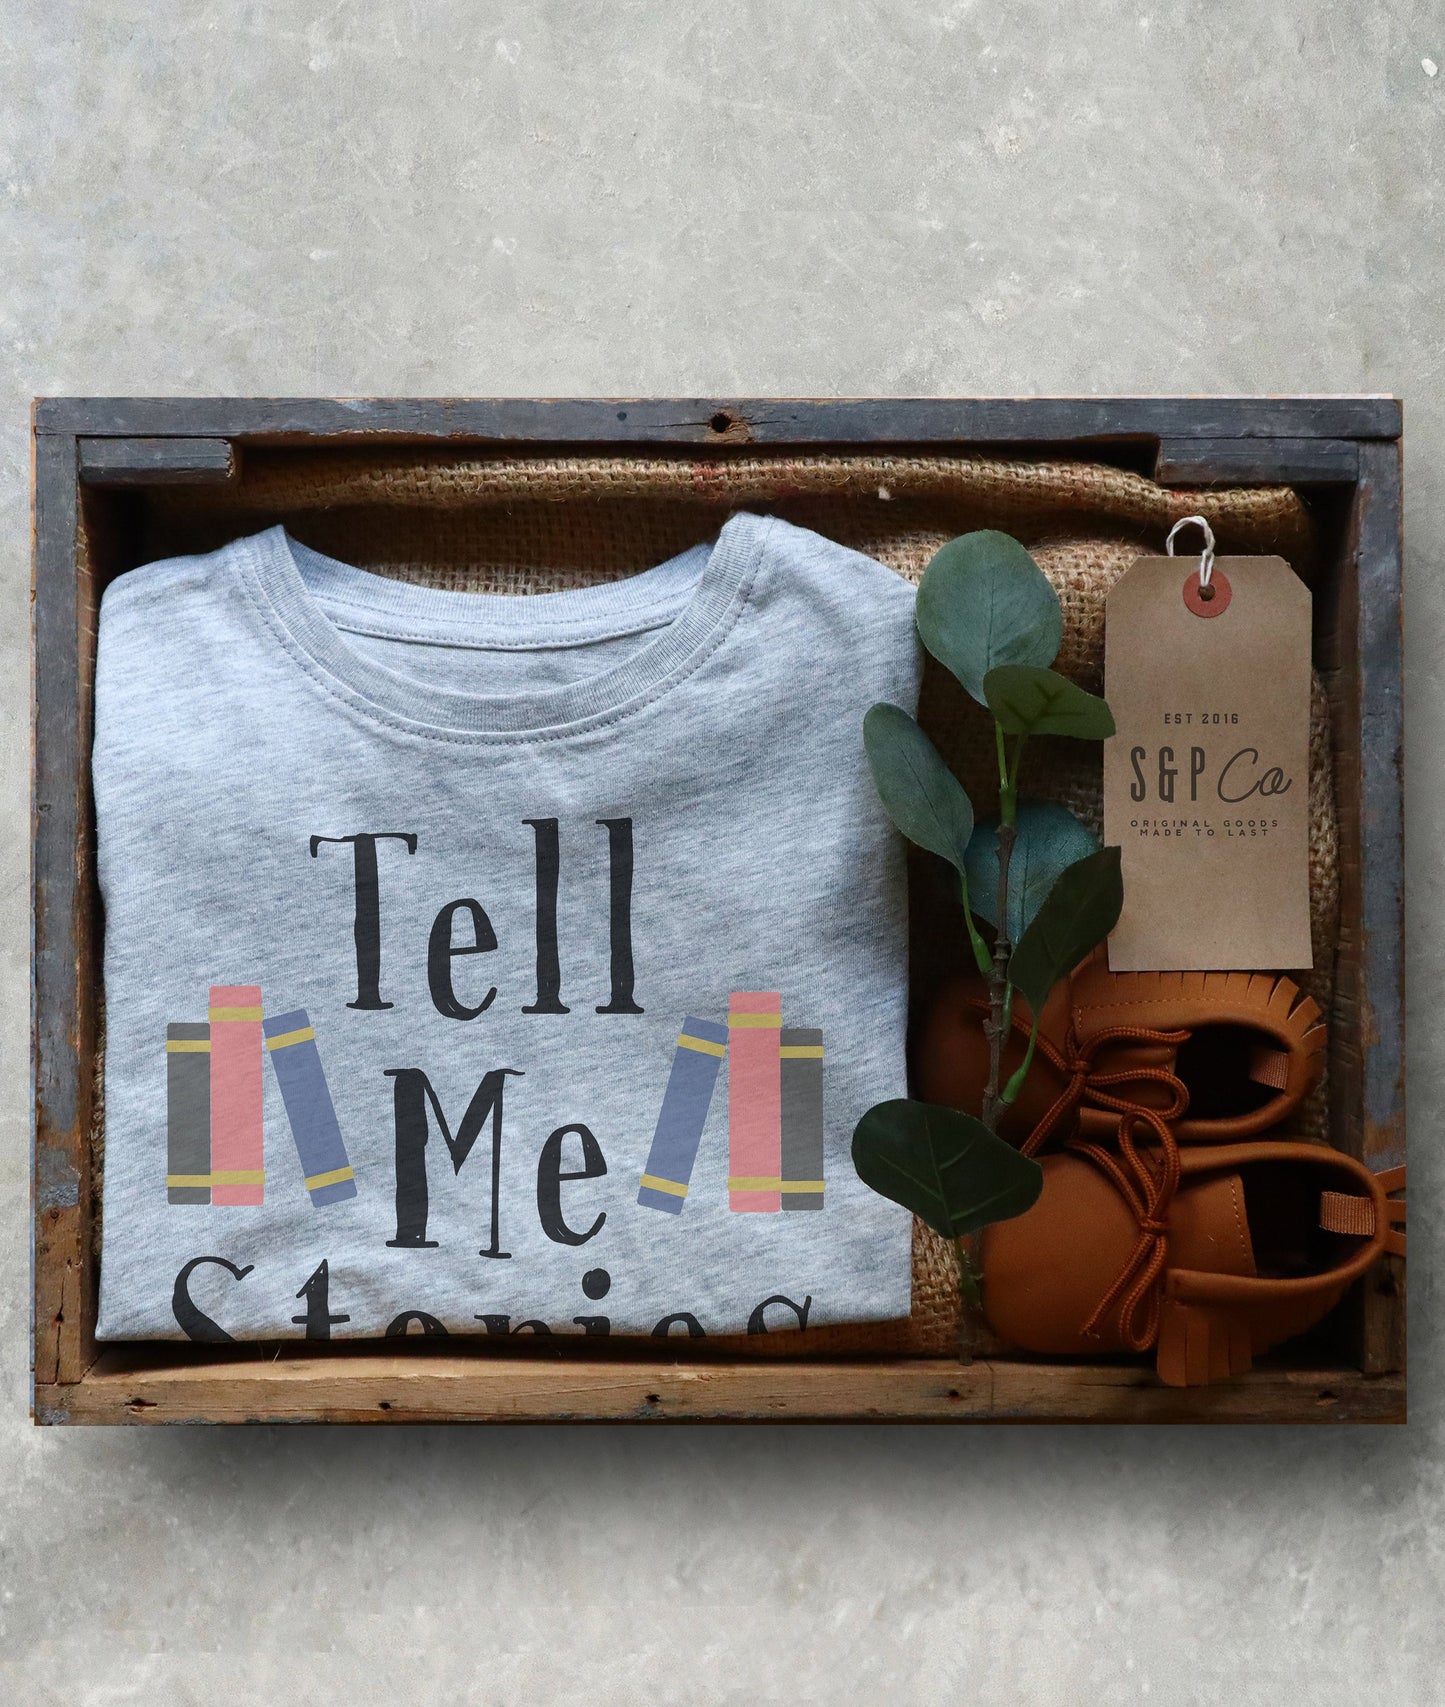 Tell Me Stories Kids Shirt - Reading Shirt Kids, Bookish Gift For Kids, Bookworm Kids Shirts, Reading T-Shirt, I Read Childrens Books Shirt